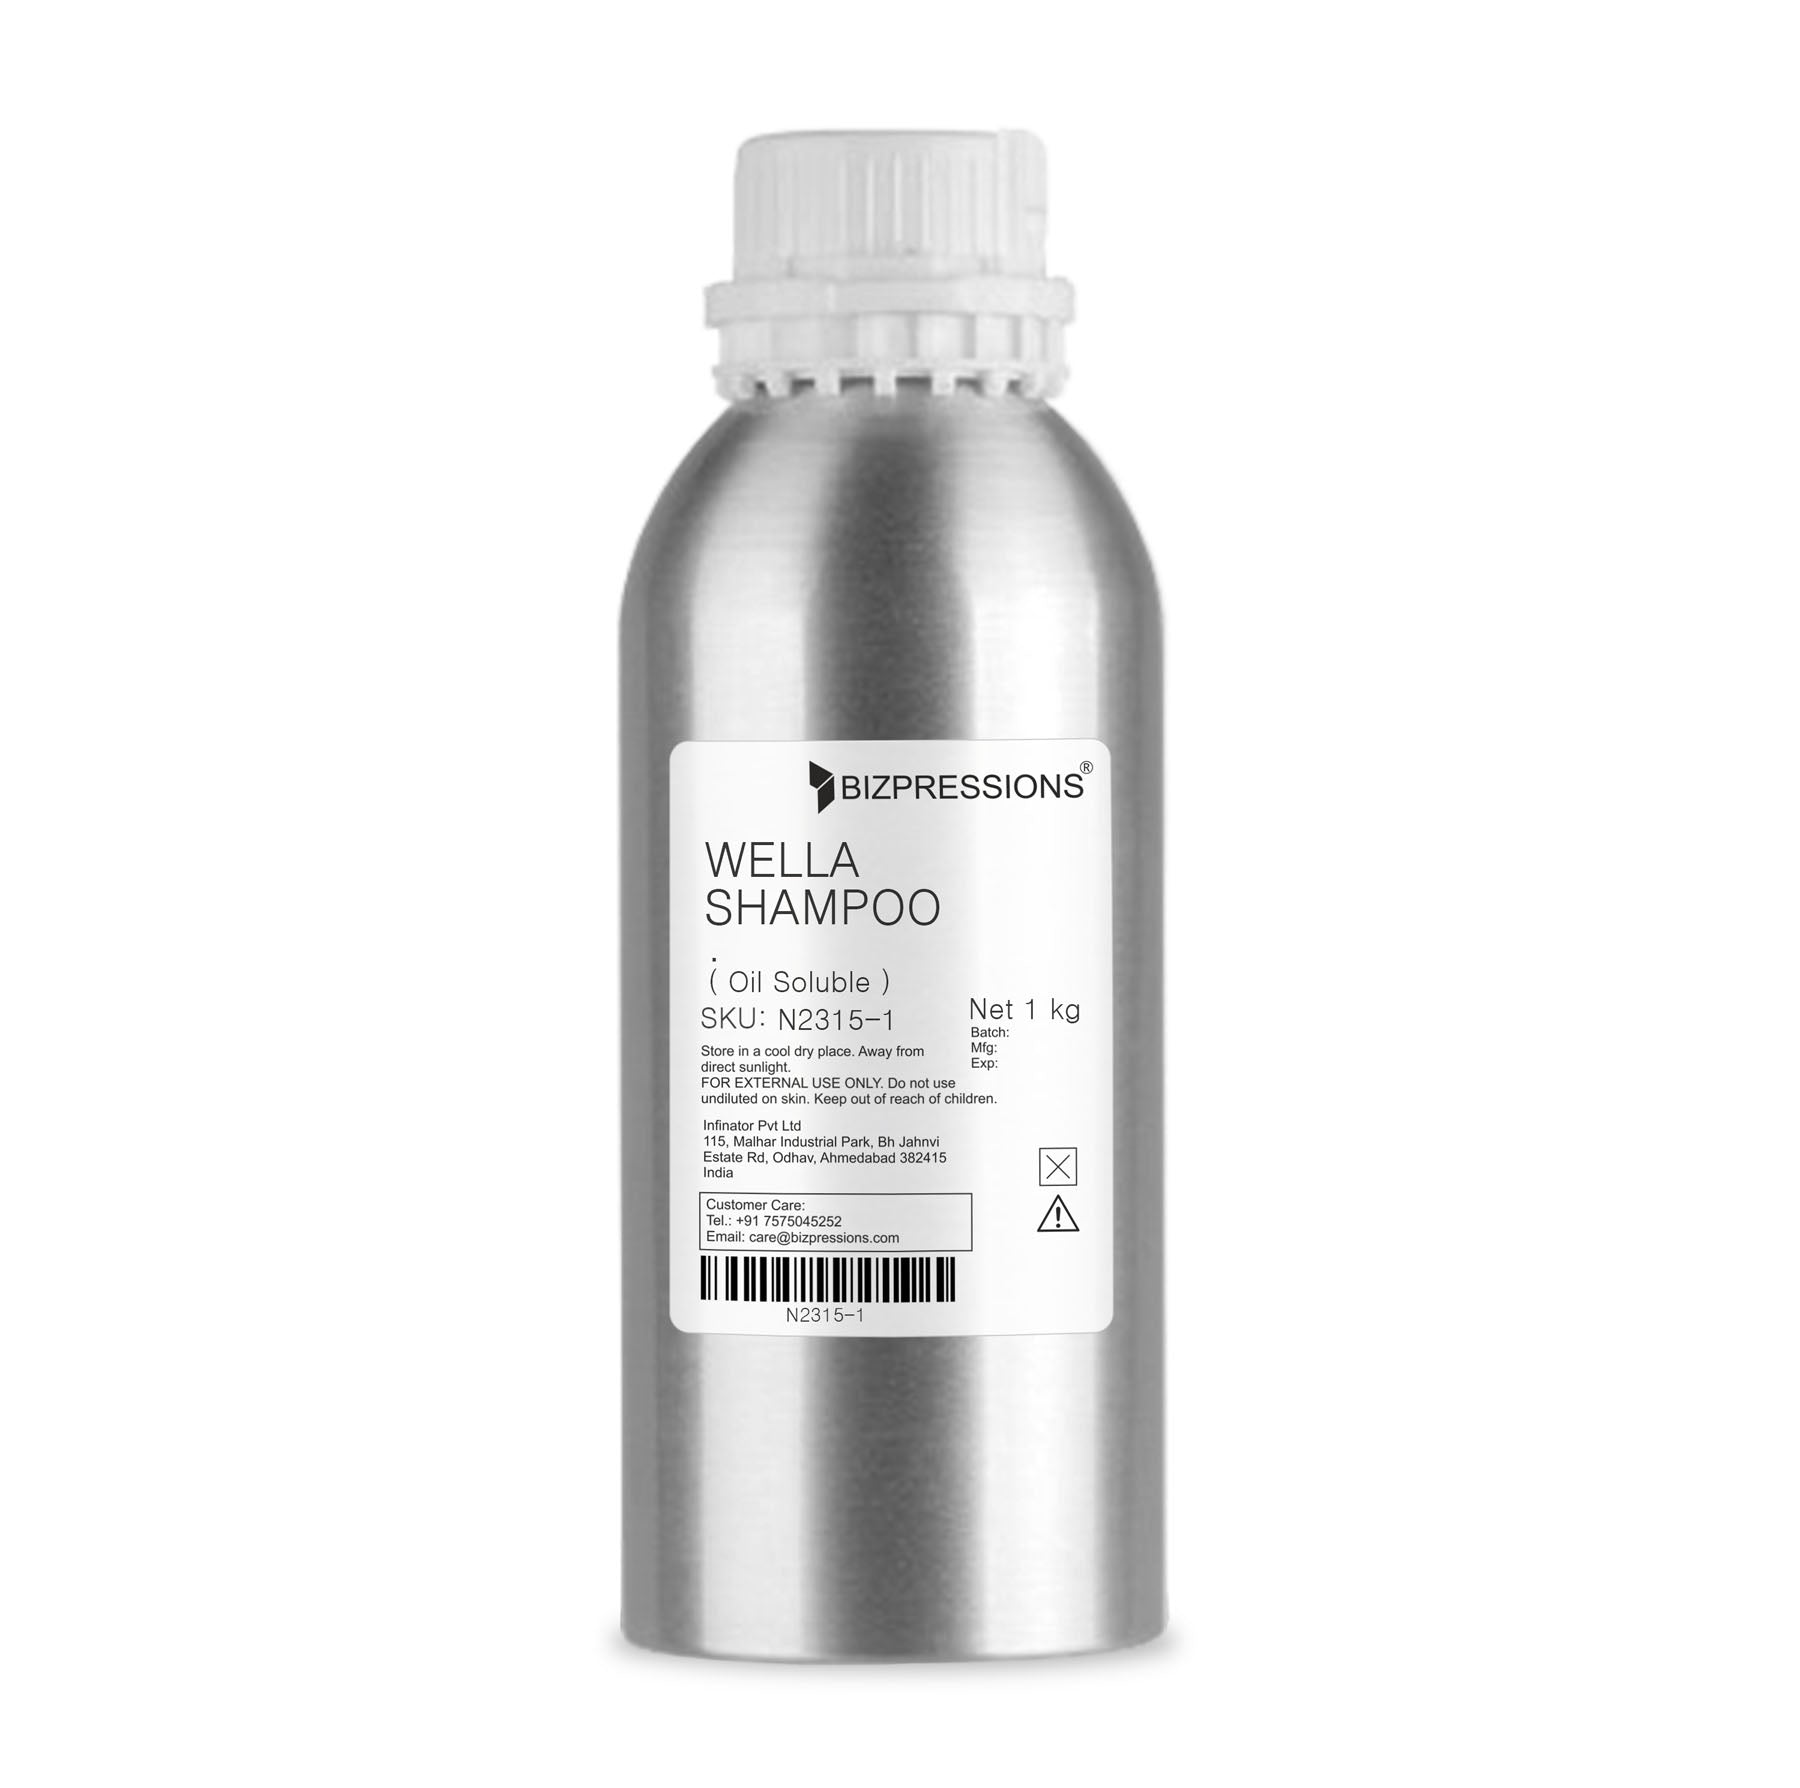 WELLA SHAMPOO - Fragrance ( Oil Soluble ) - 1 kg